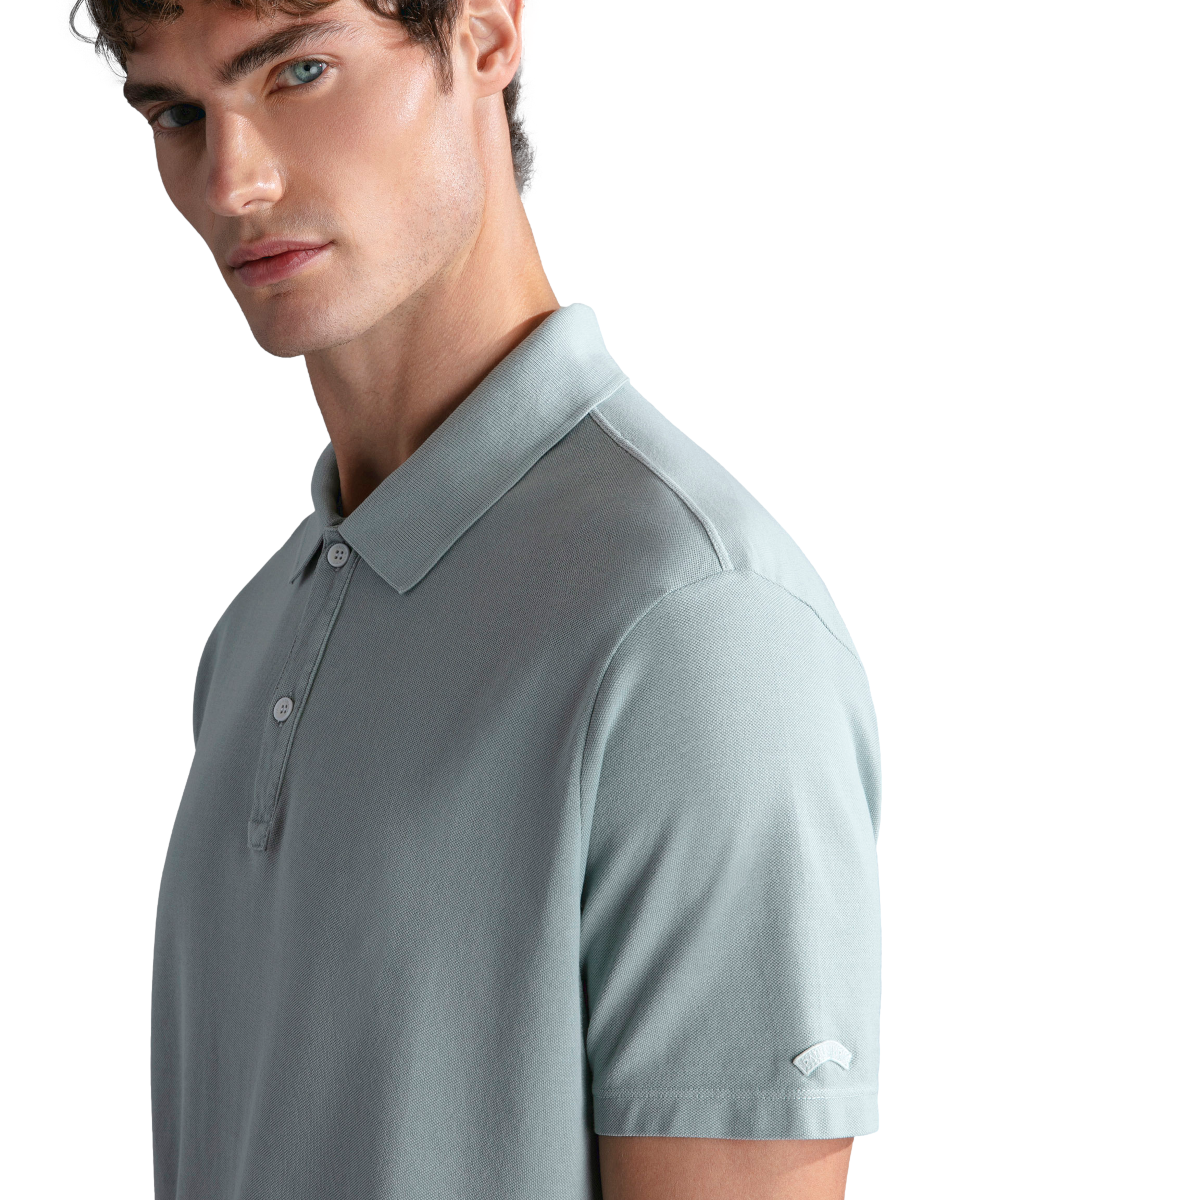 Paul & Shark GD Pique Cotton Polo Shirt 072 Ether